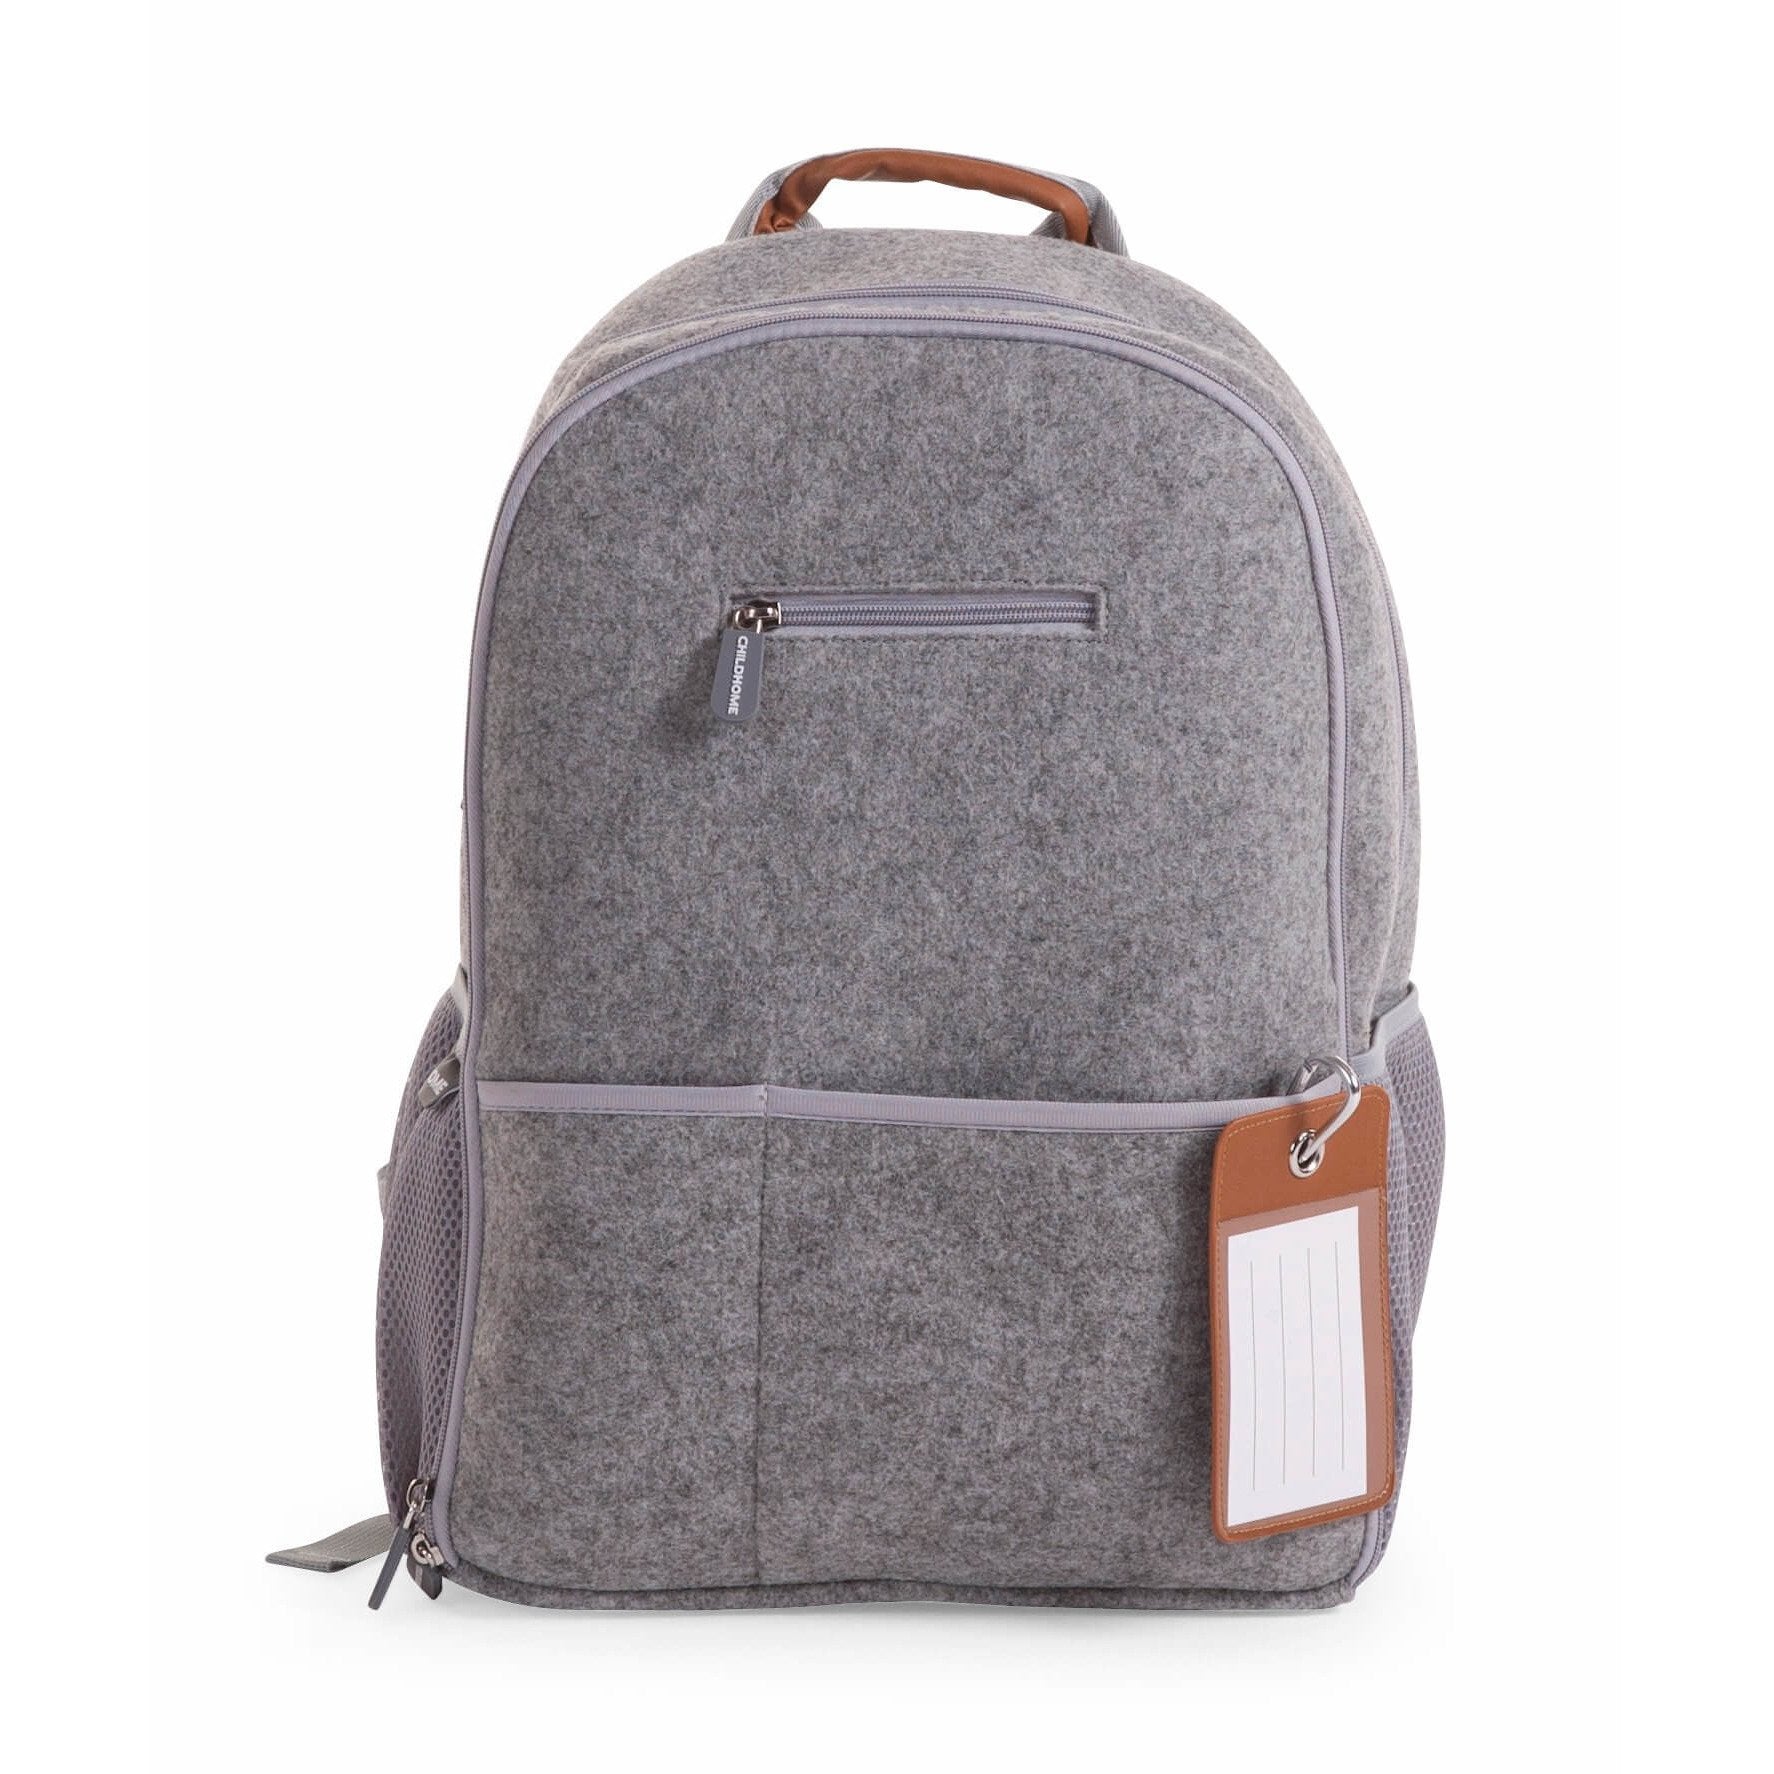 ChildHome Nursery Backpack - Felt Grey